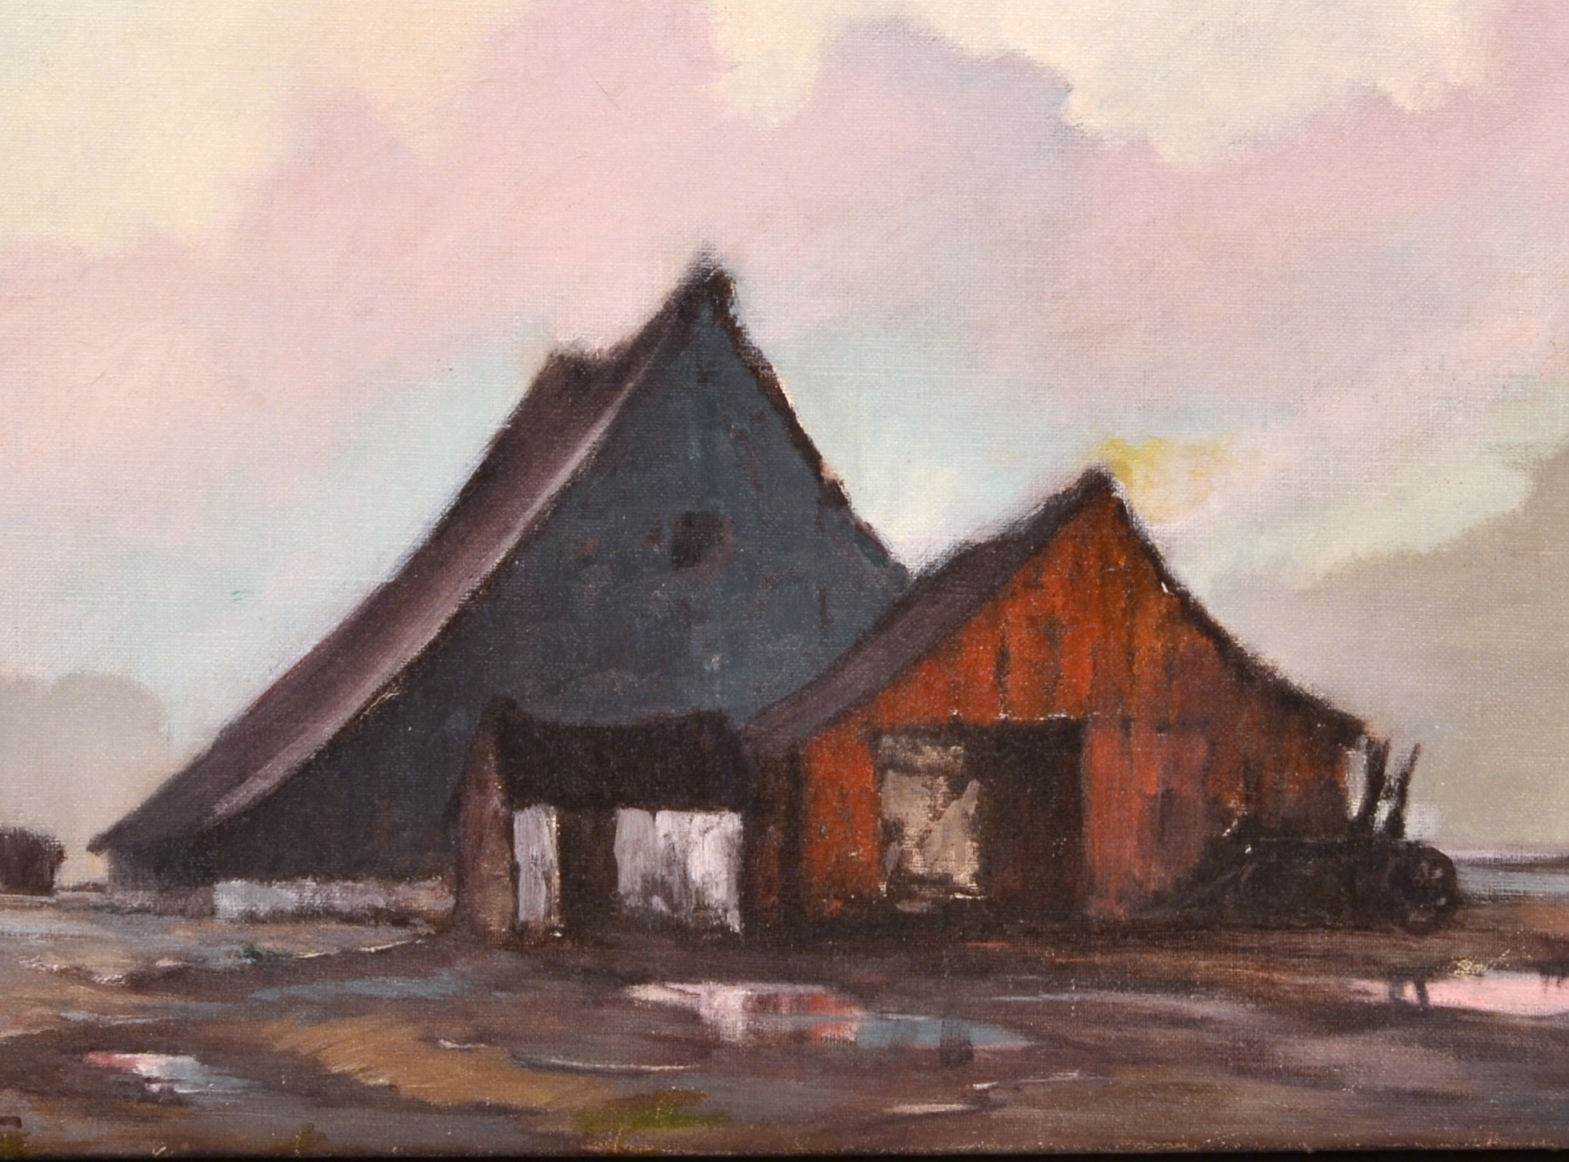 Oscar Daniel Soellner (1890-1952)  "Landscape with Barns"